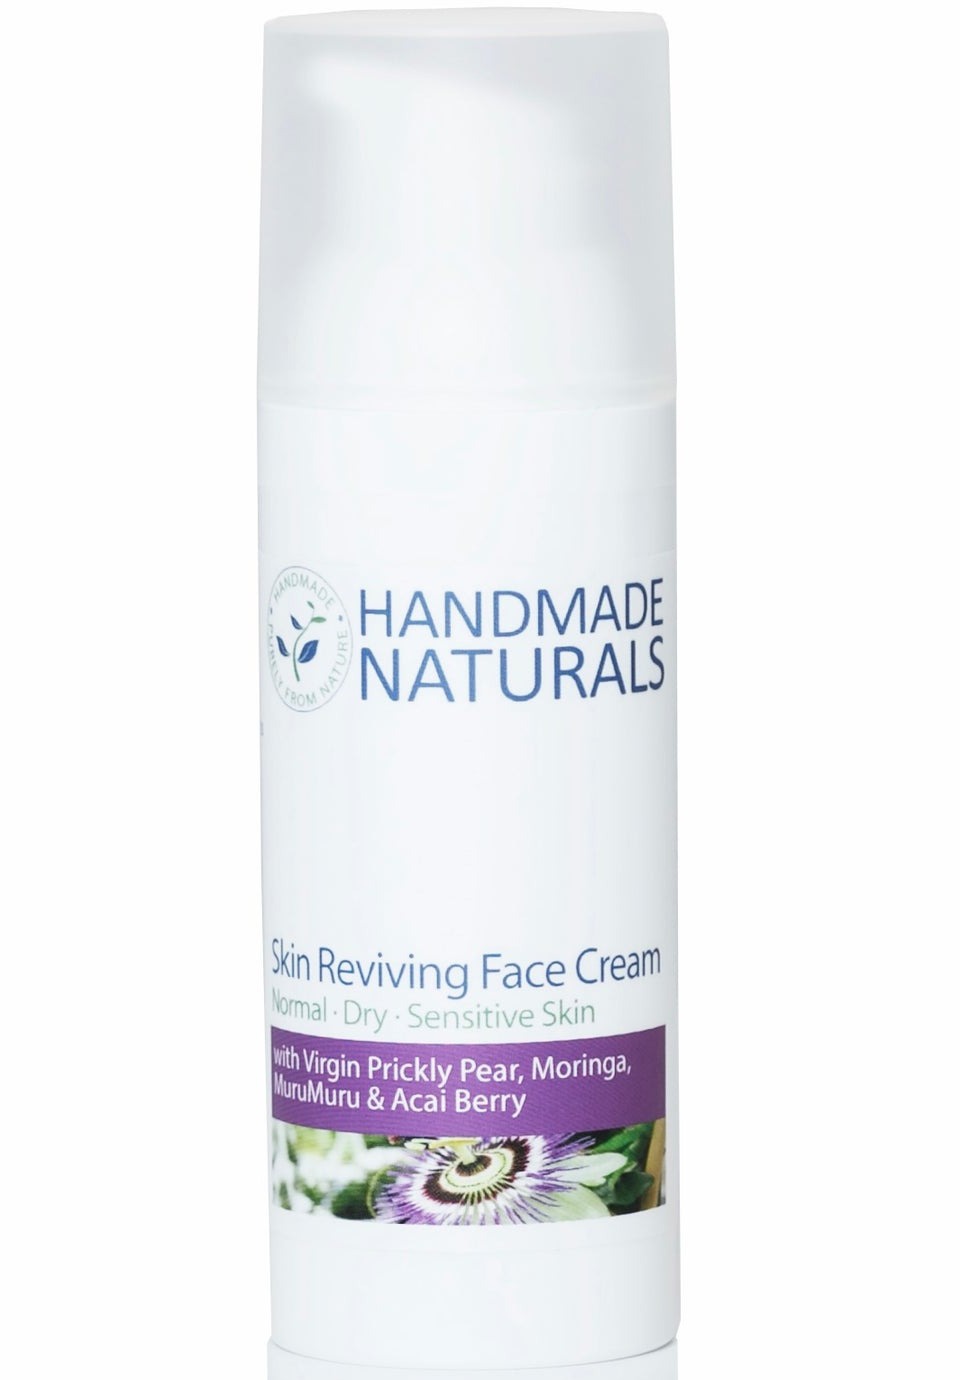 Handmade Naturals Skin Reviving Face Cream